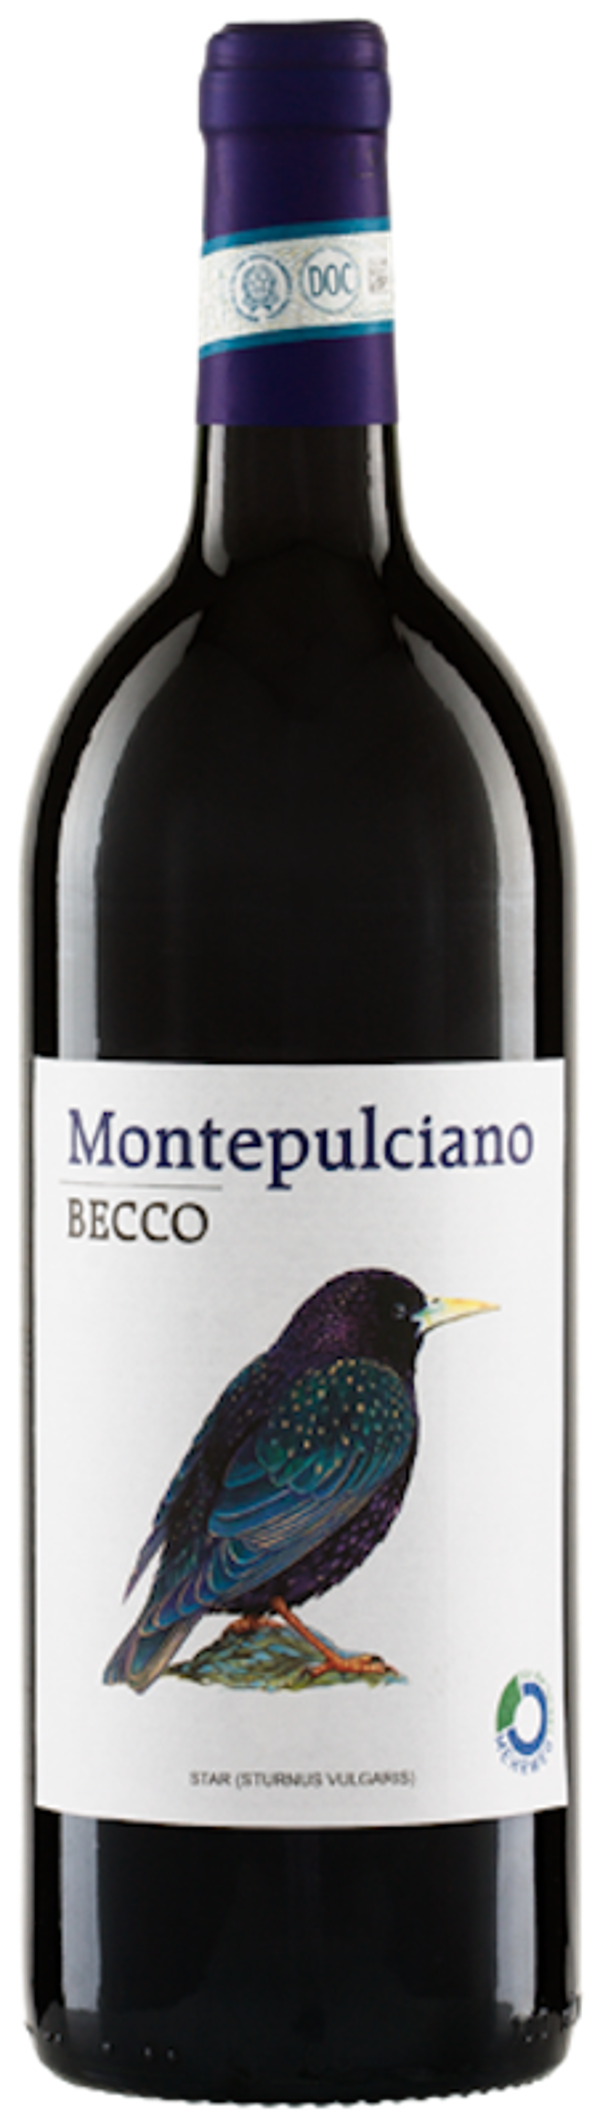 Produktfoto zu Montelpulciano Becco rot 1L